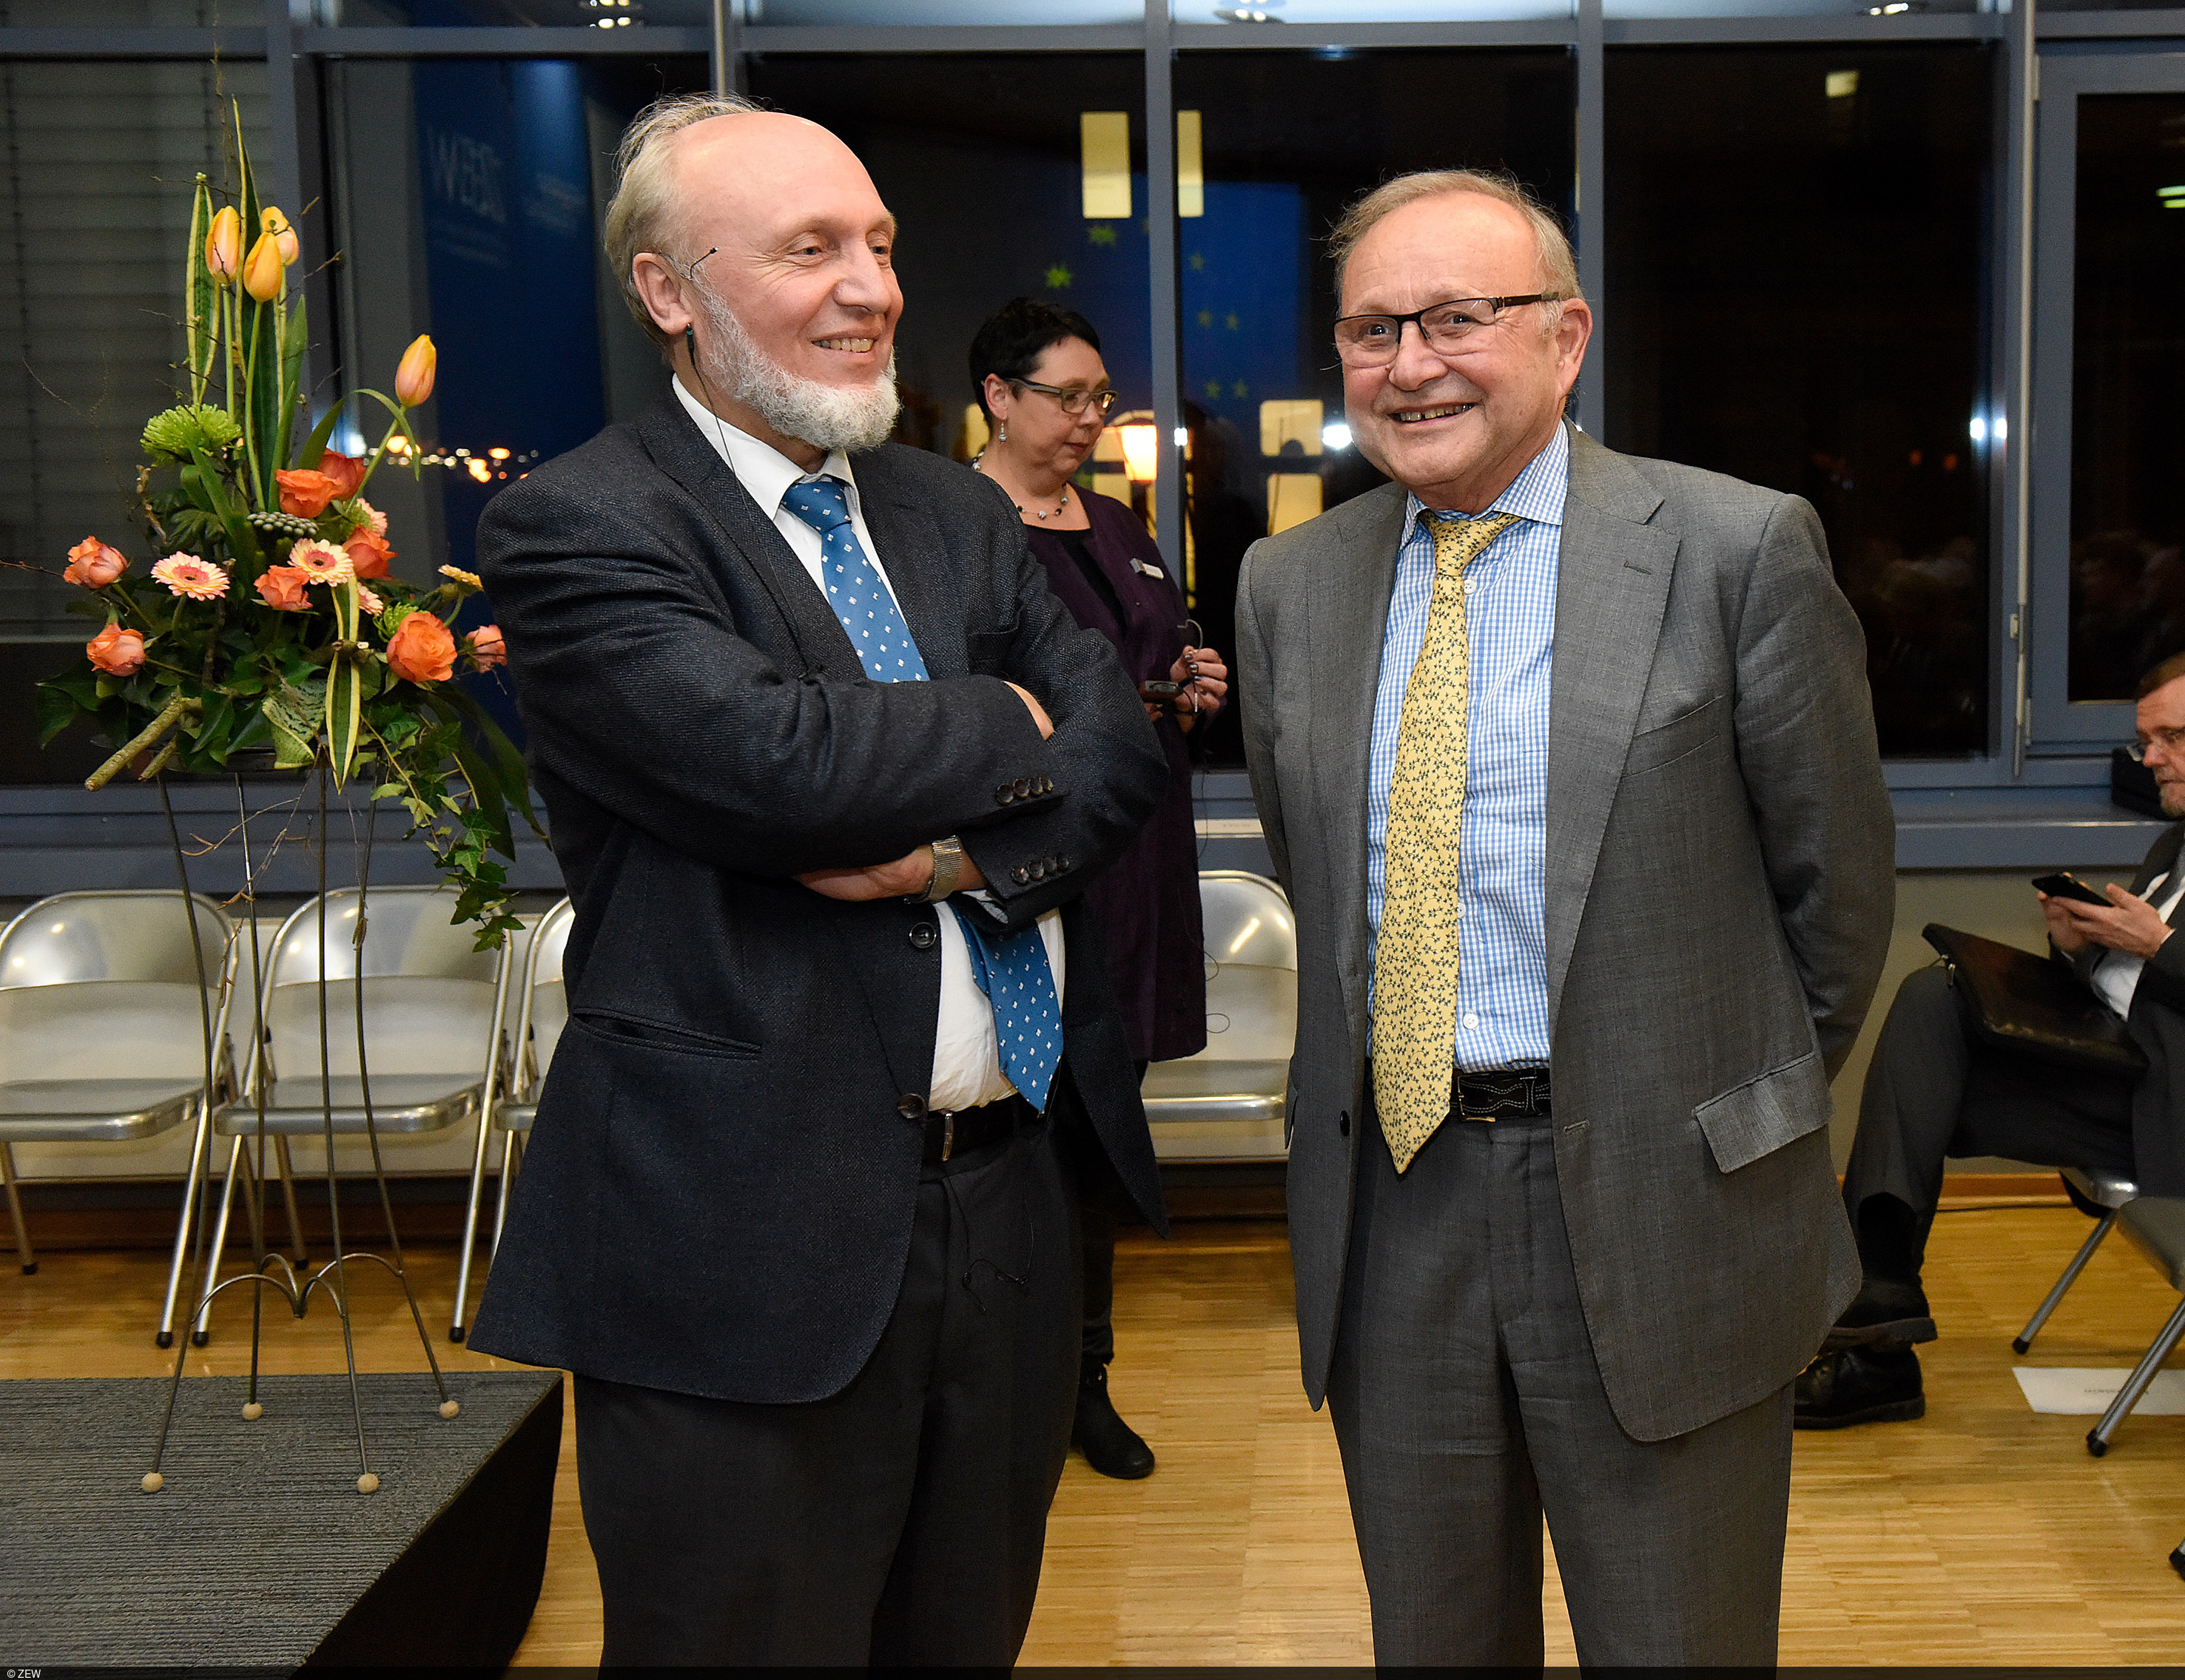 Hans-Werner Sinn in conversation with former ZEW President Wolfgang Franz